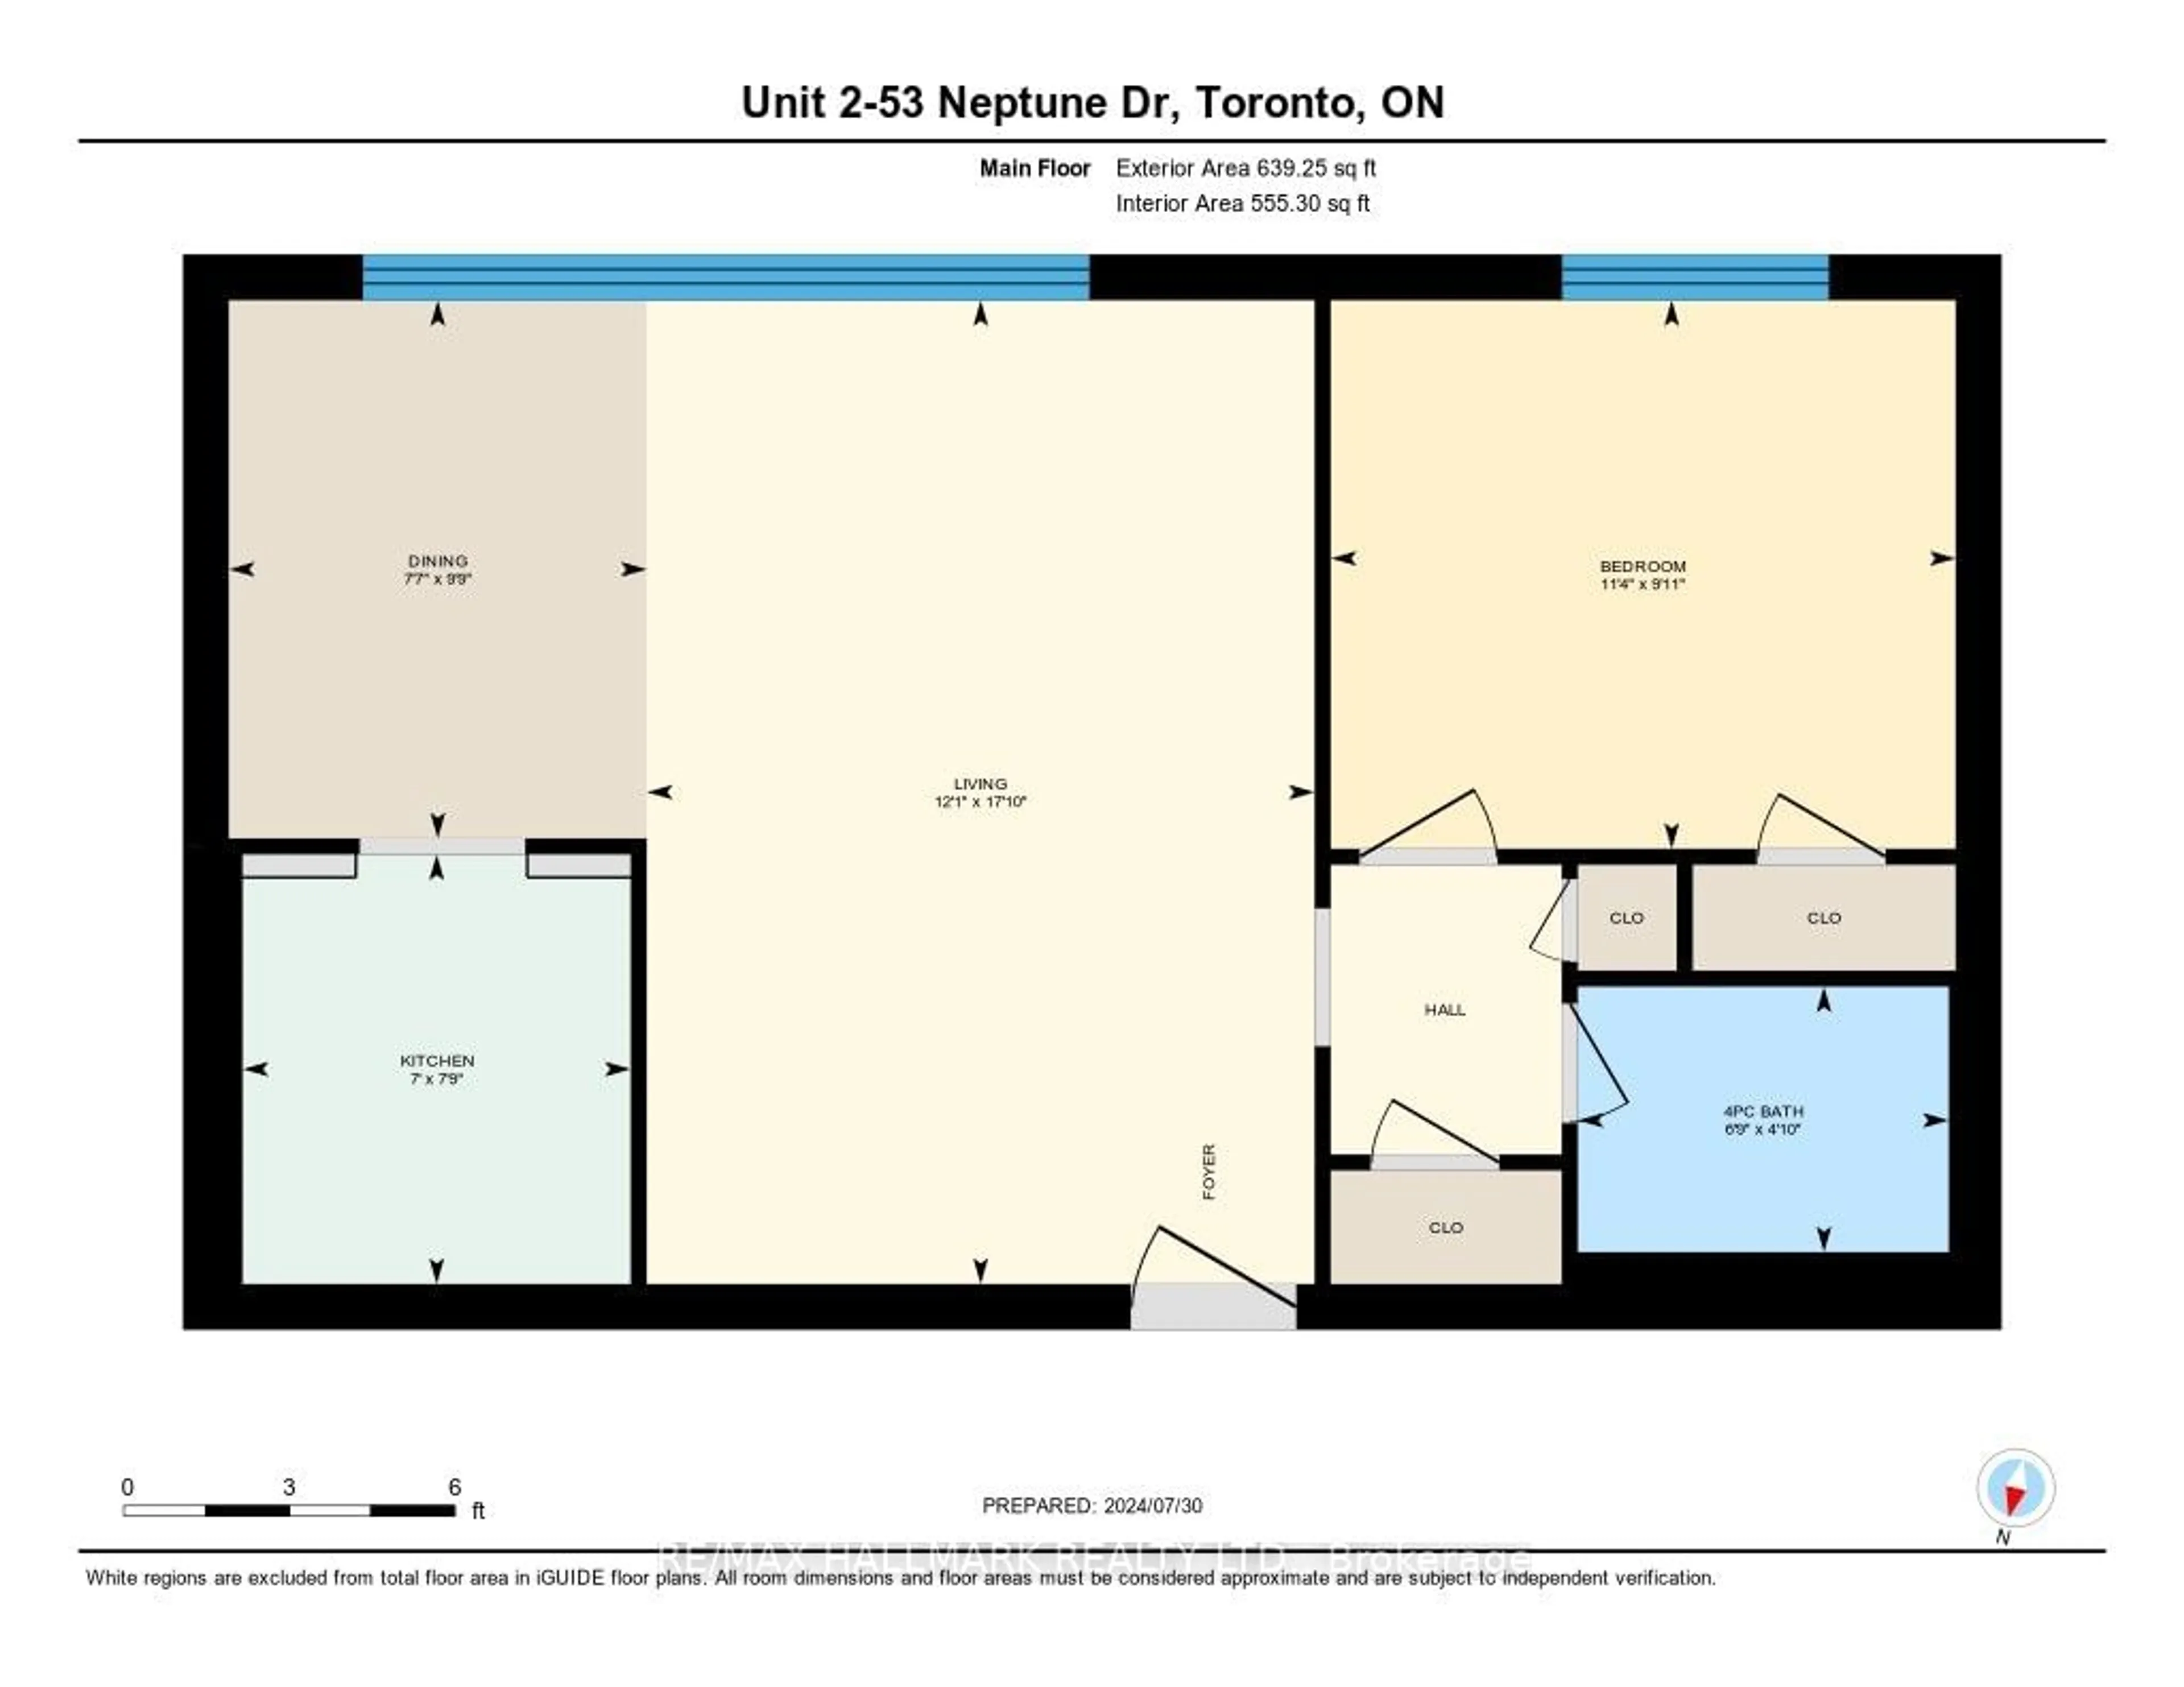 Floor plan for 53 Neptune Dr, Toronto Ontario M6A 1X2